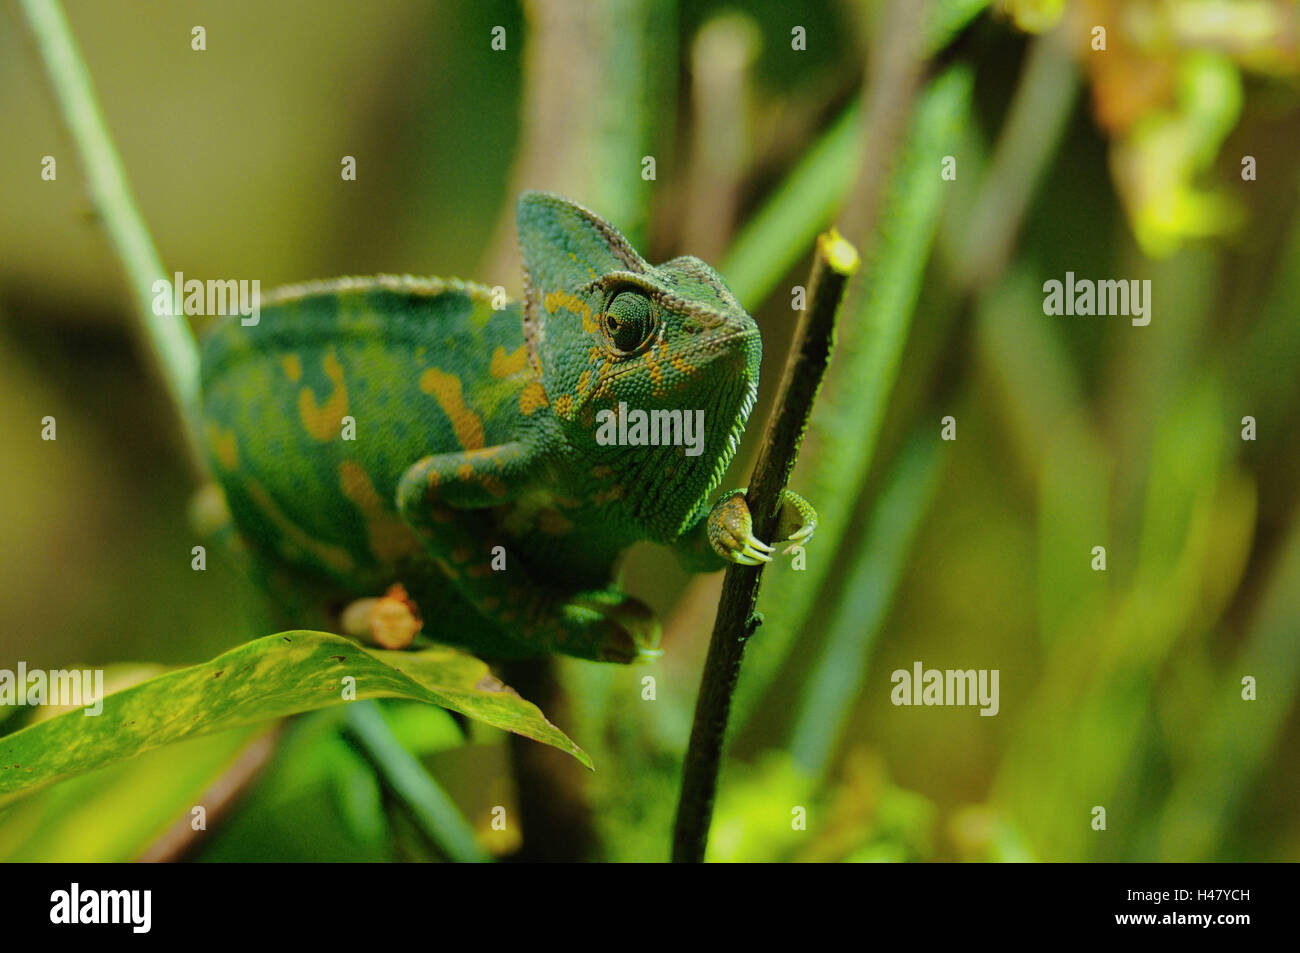 Yemen chameleon, Chamaeleo calyptratus, vista frontale, arrampicata, guardando la telecamera, Foto Stock